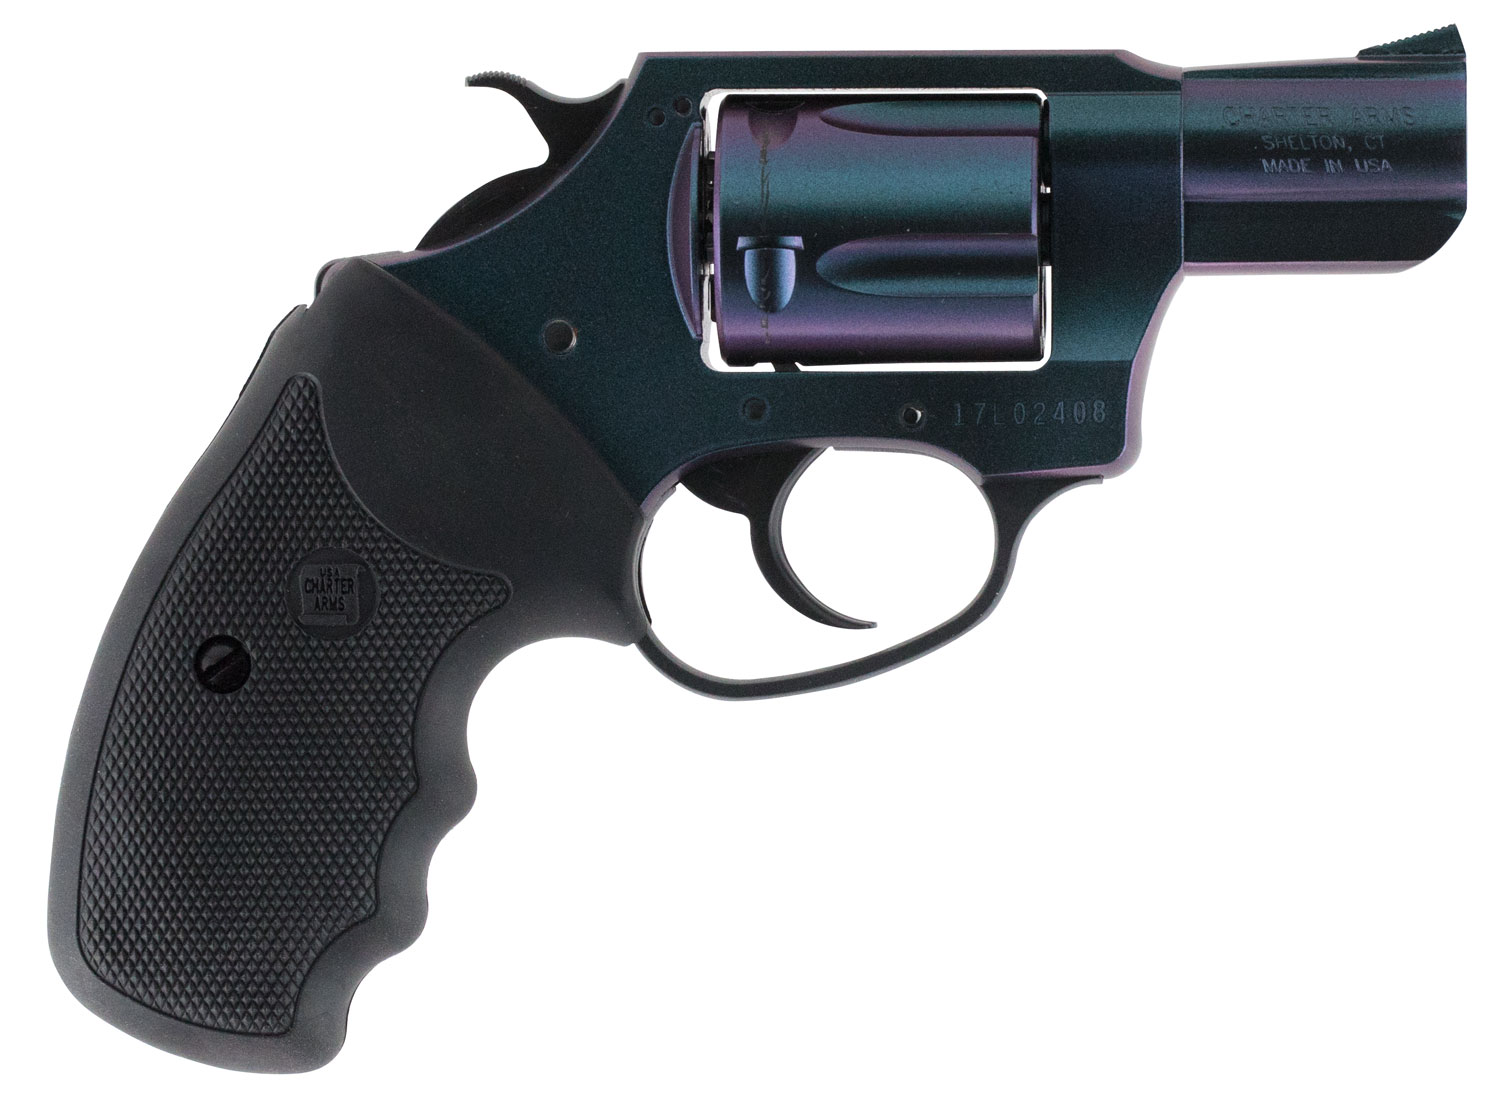 Charter Arms Undercover Chameleon Revolver 25387, 38 Special, 2", Black Rubber Grip, Iridescent Cerakote Finish, 5 Rd